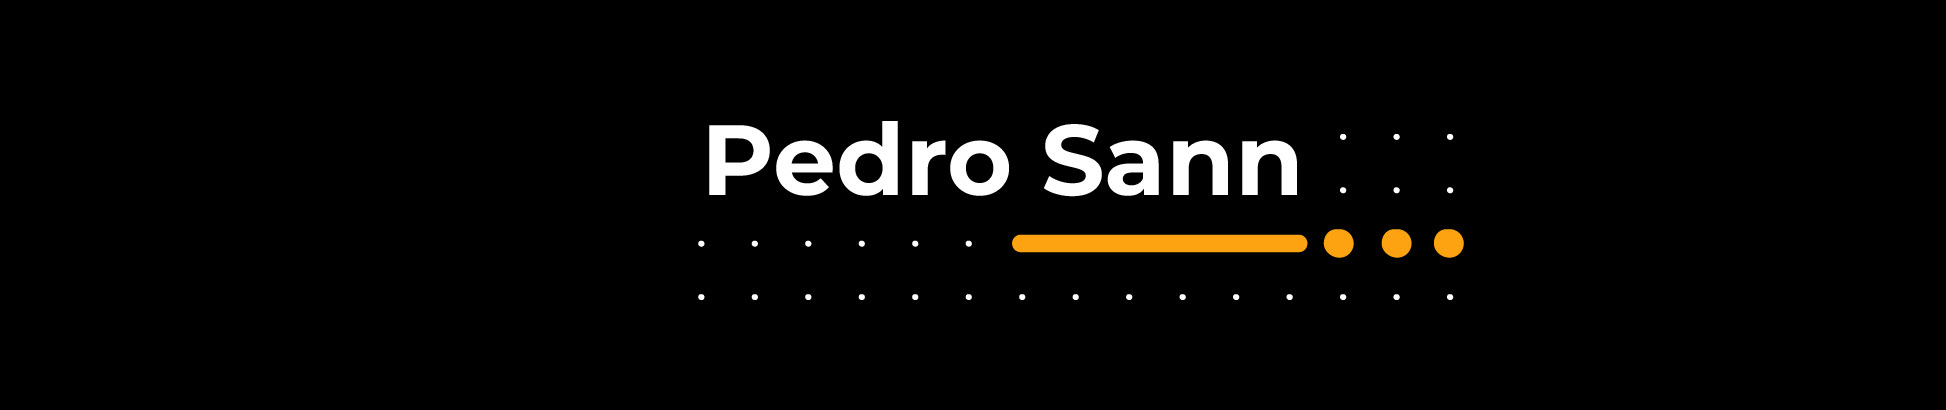 Pedro Sann's profile banner